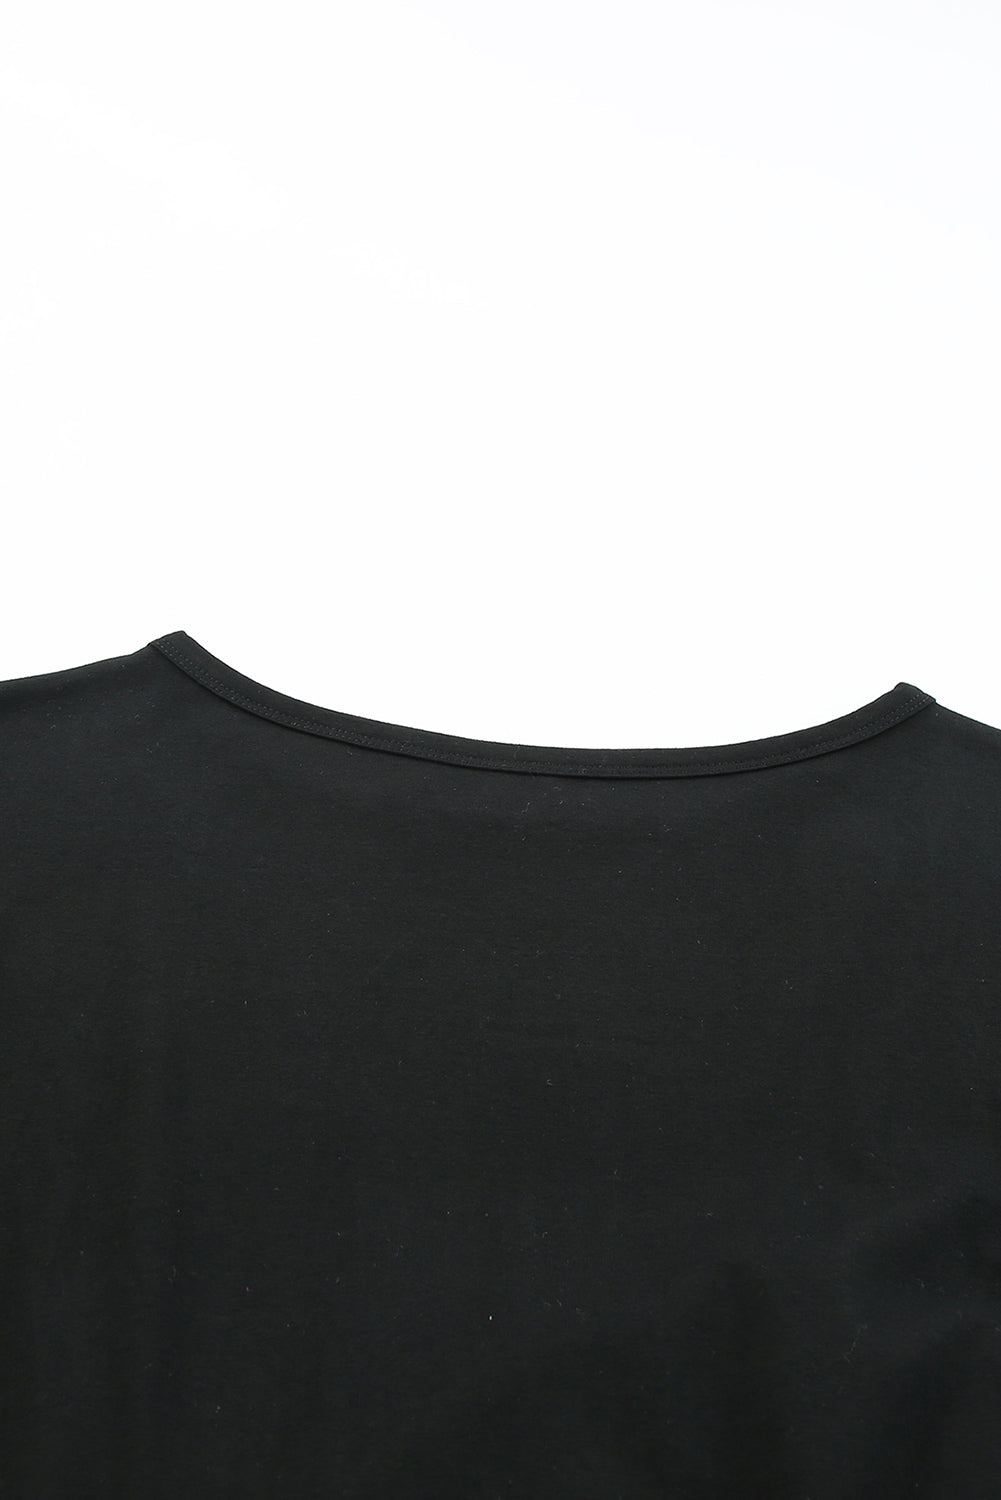 Black Chest Pocket Loose T-shirt Ruched Bodycon Mini Dress MDJ0081